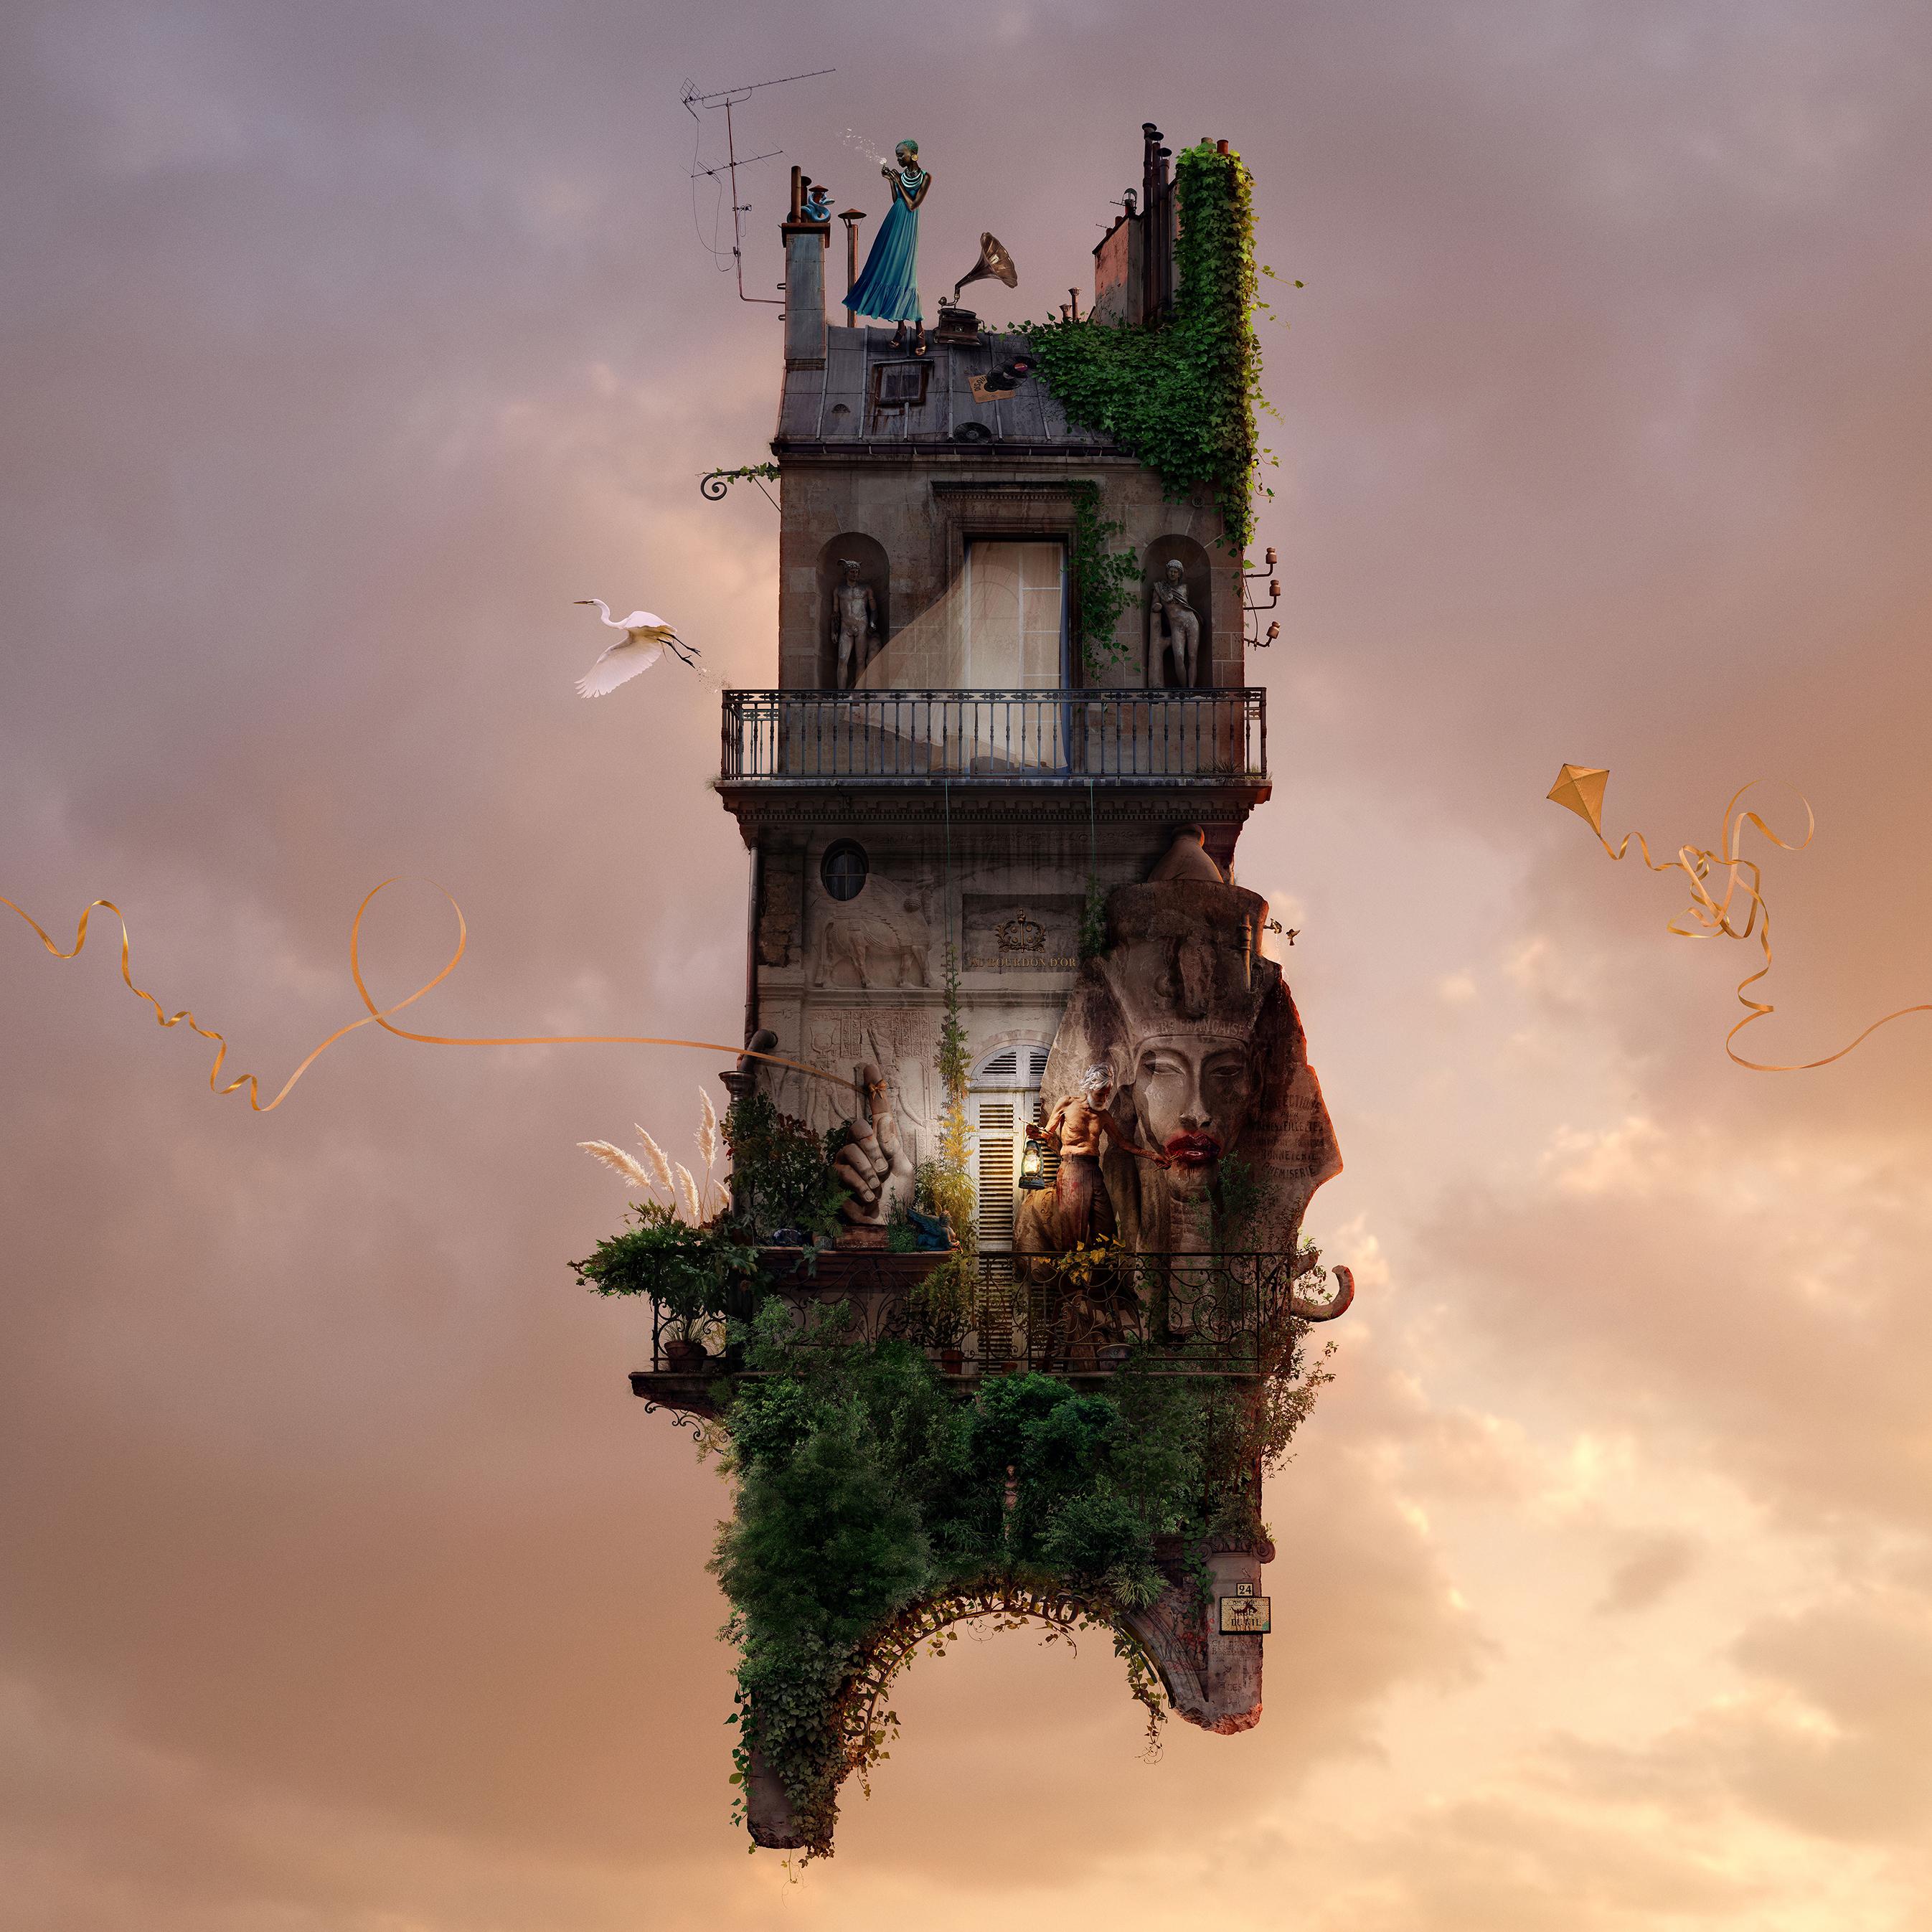 Laurent Chéhère Color Photograph - Crepuscule - Contemporary whimsical digital photo montage of a flying house 